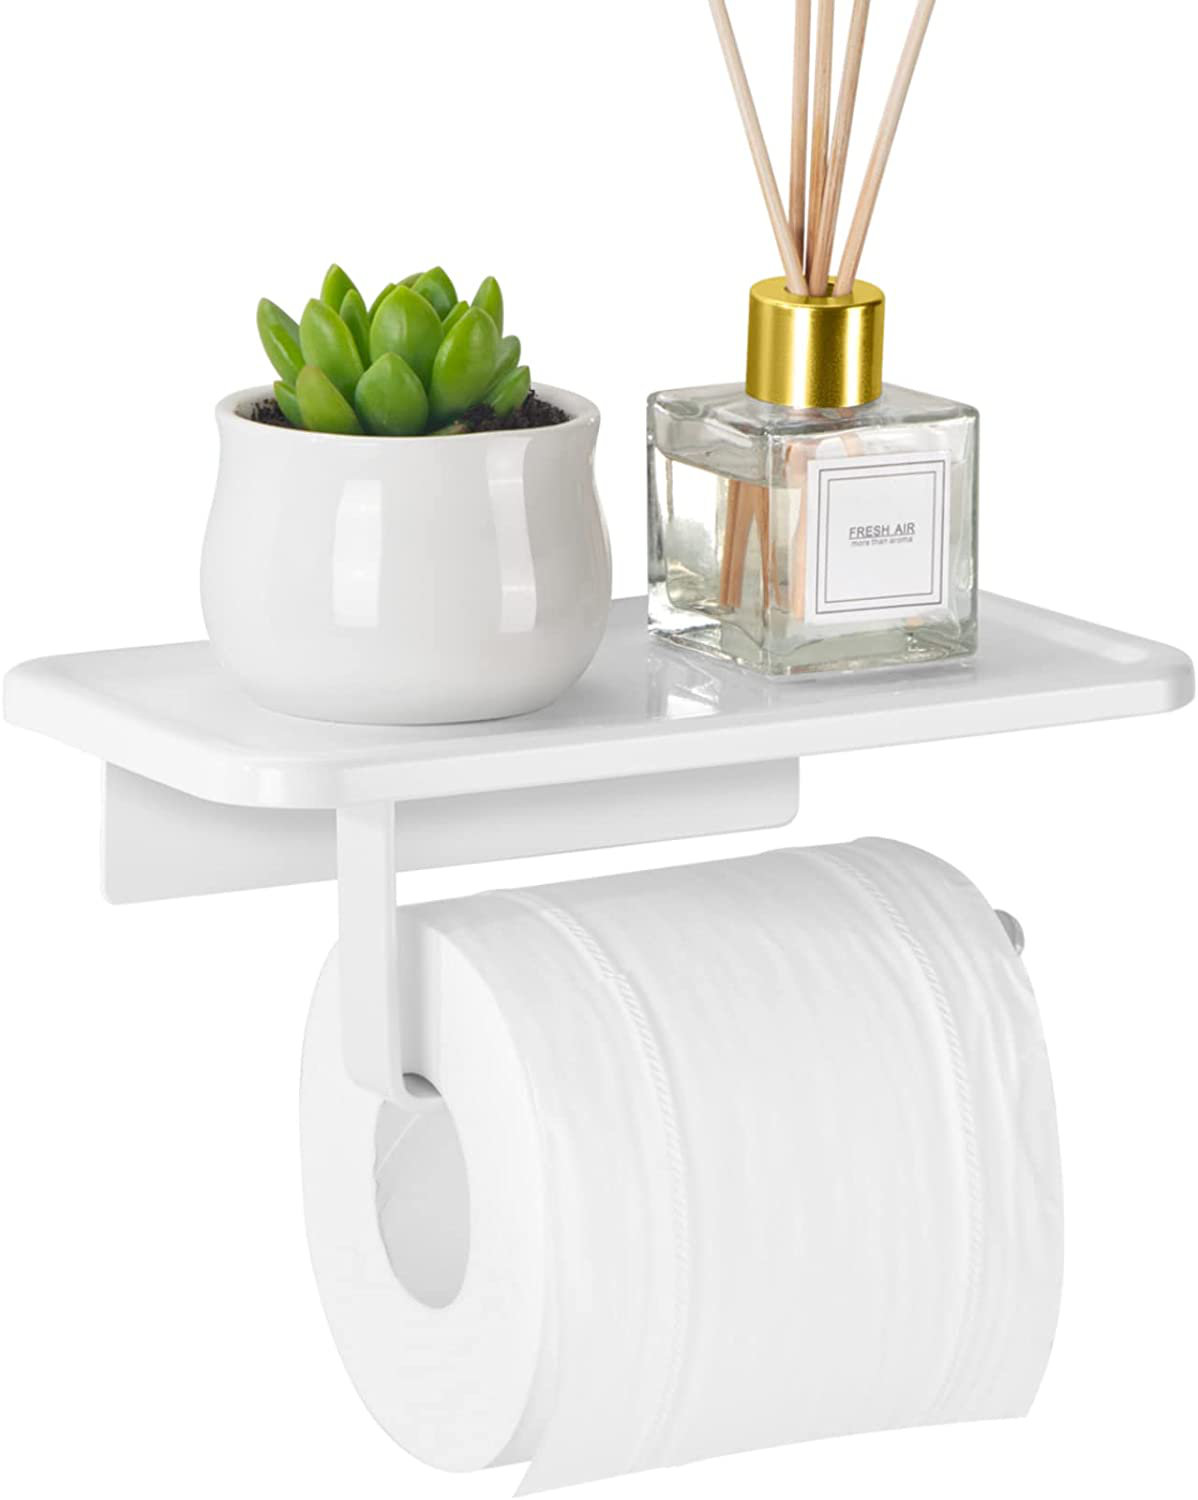 Toilet Paper Holder with Phone Shelf+ Two AdhesiveTowel Robe Hooks, Self  Adhesive or Screw Wall Mounted Toilet Paper Roll Dispenser, Rustproof